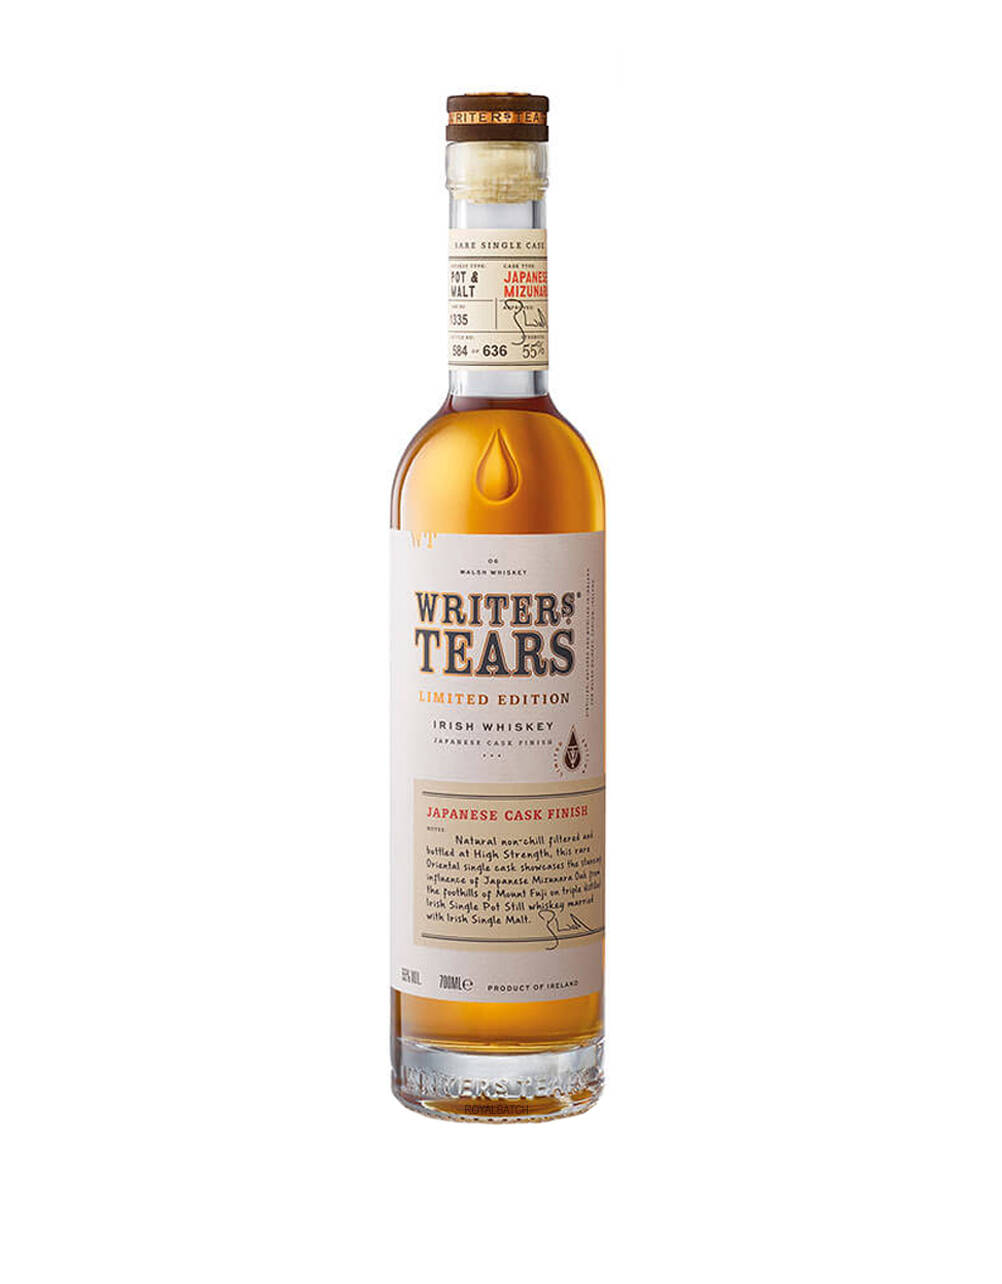 Writers Tears Limited Edition Japanese Cask Finish Irish Whiskey